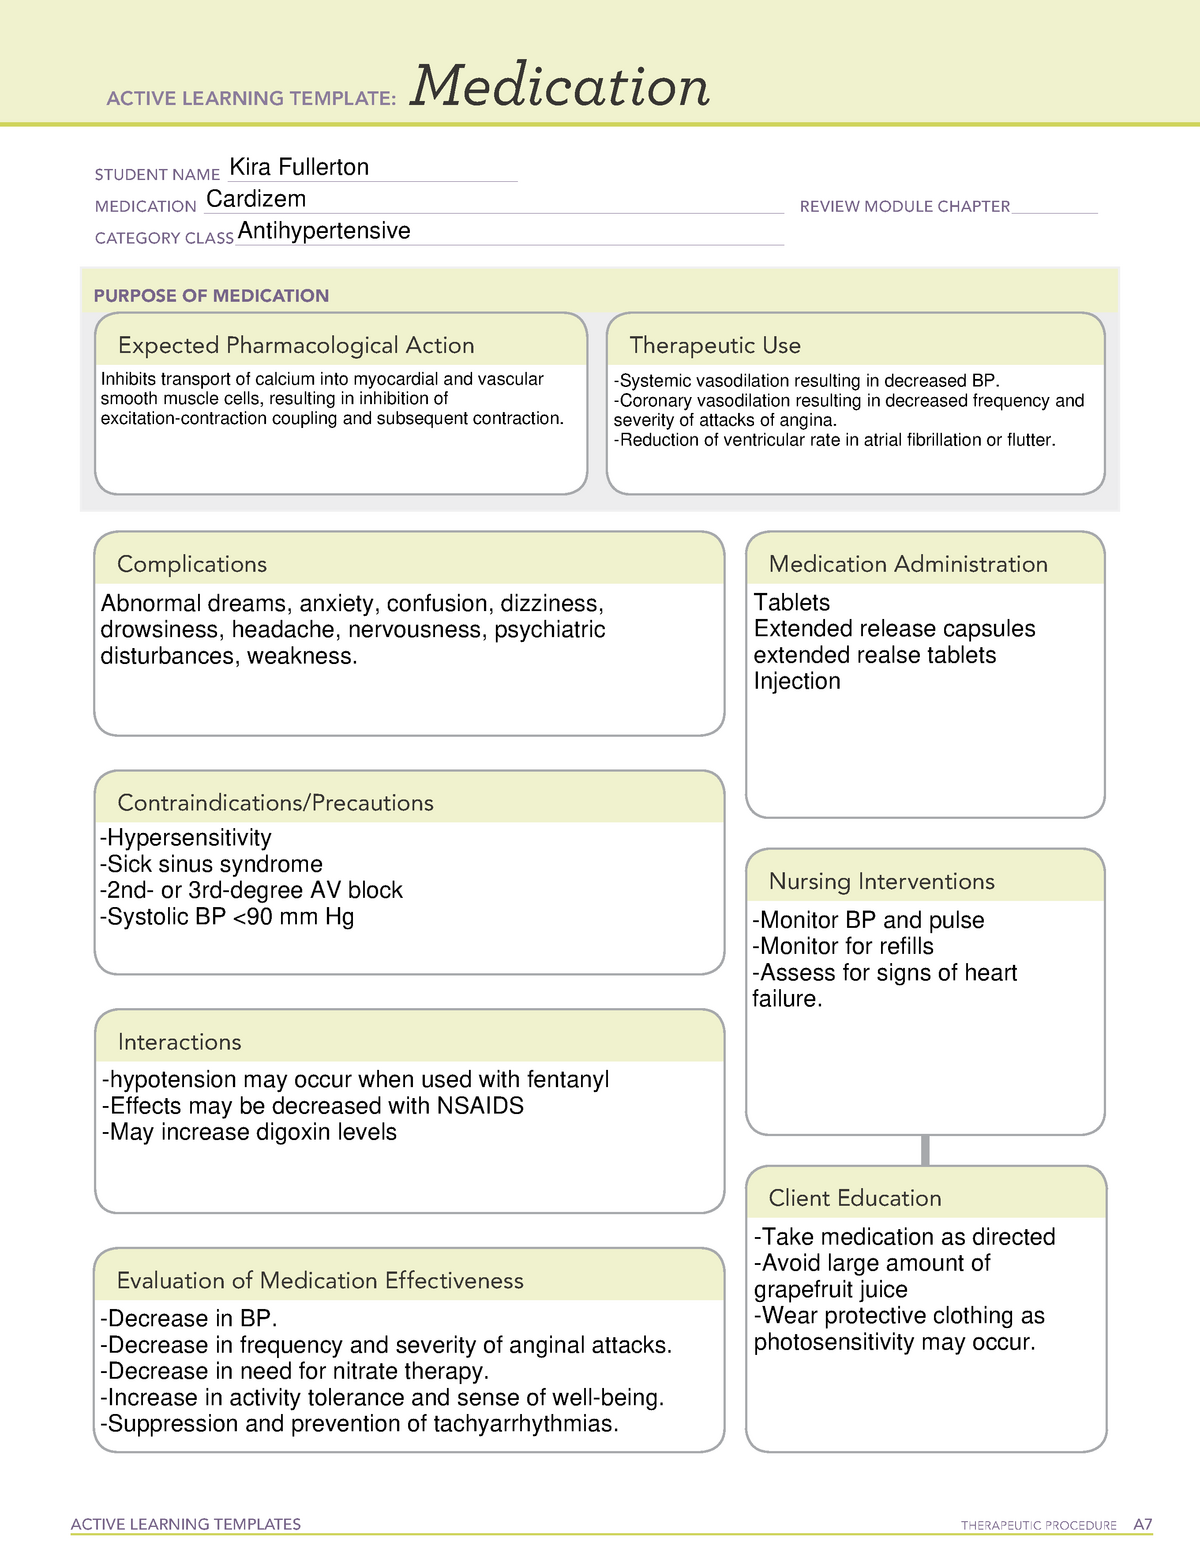 MED Cardizem ATI medications sheet ACTIVE LEARNING TEMPLATES